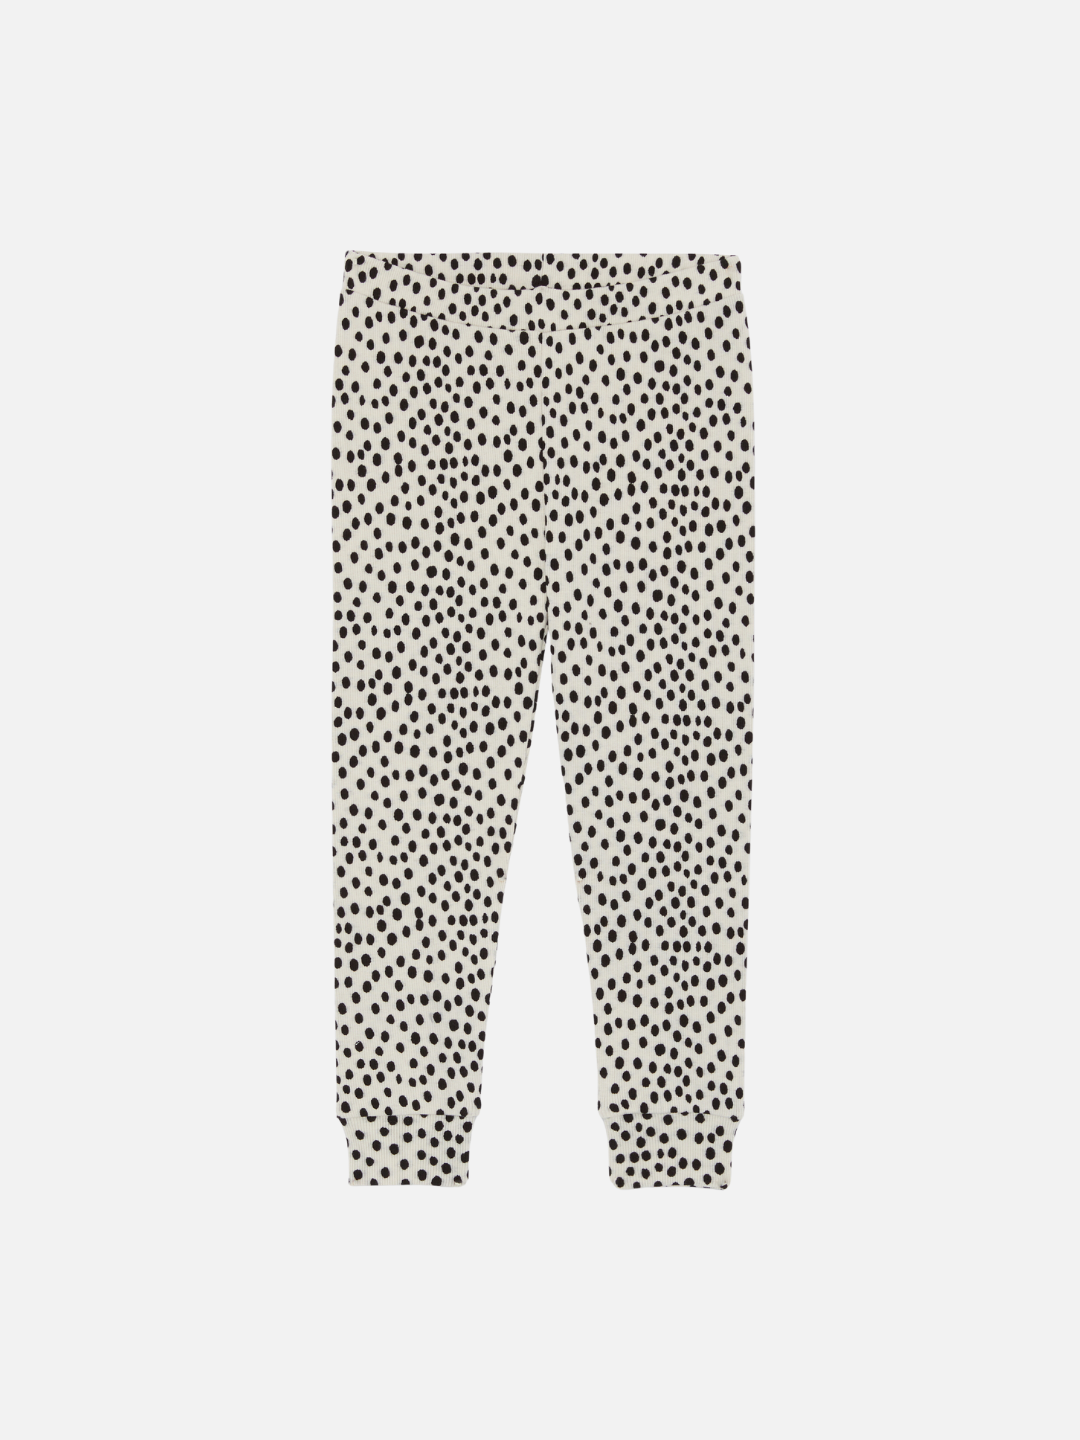 A pair of kids' leggings in a black and white mini cheetah dot print